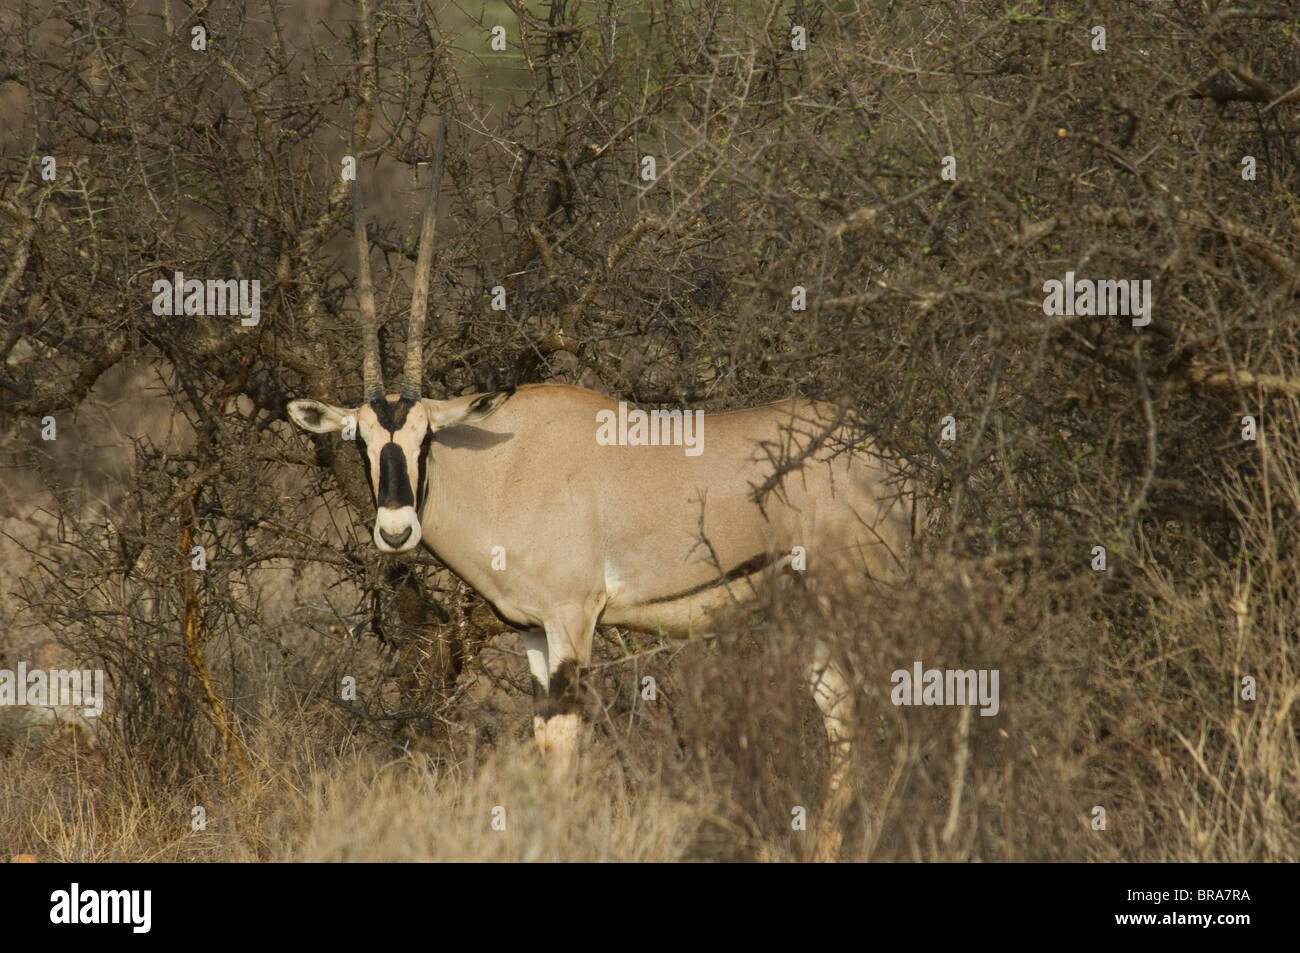 ORYX PEERING AUS dornige Bürste Samburu National Reserve Kenia Afrika Stockfoto